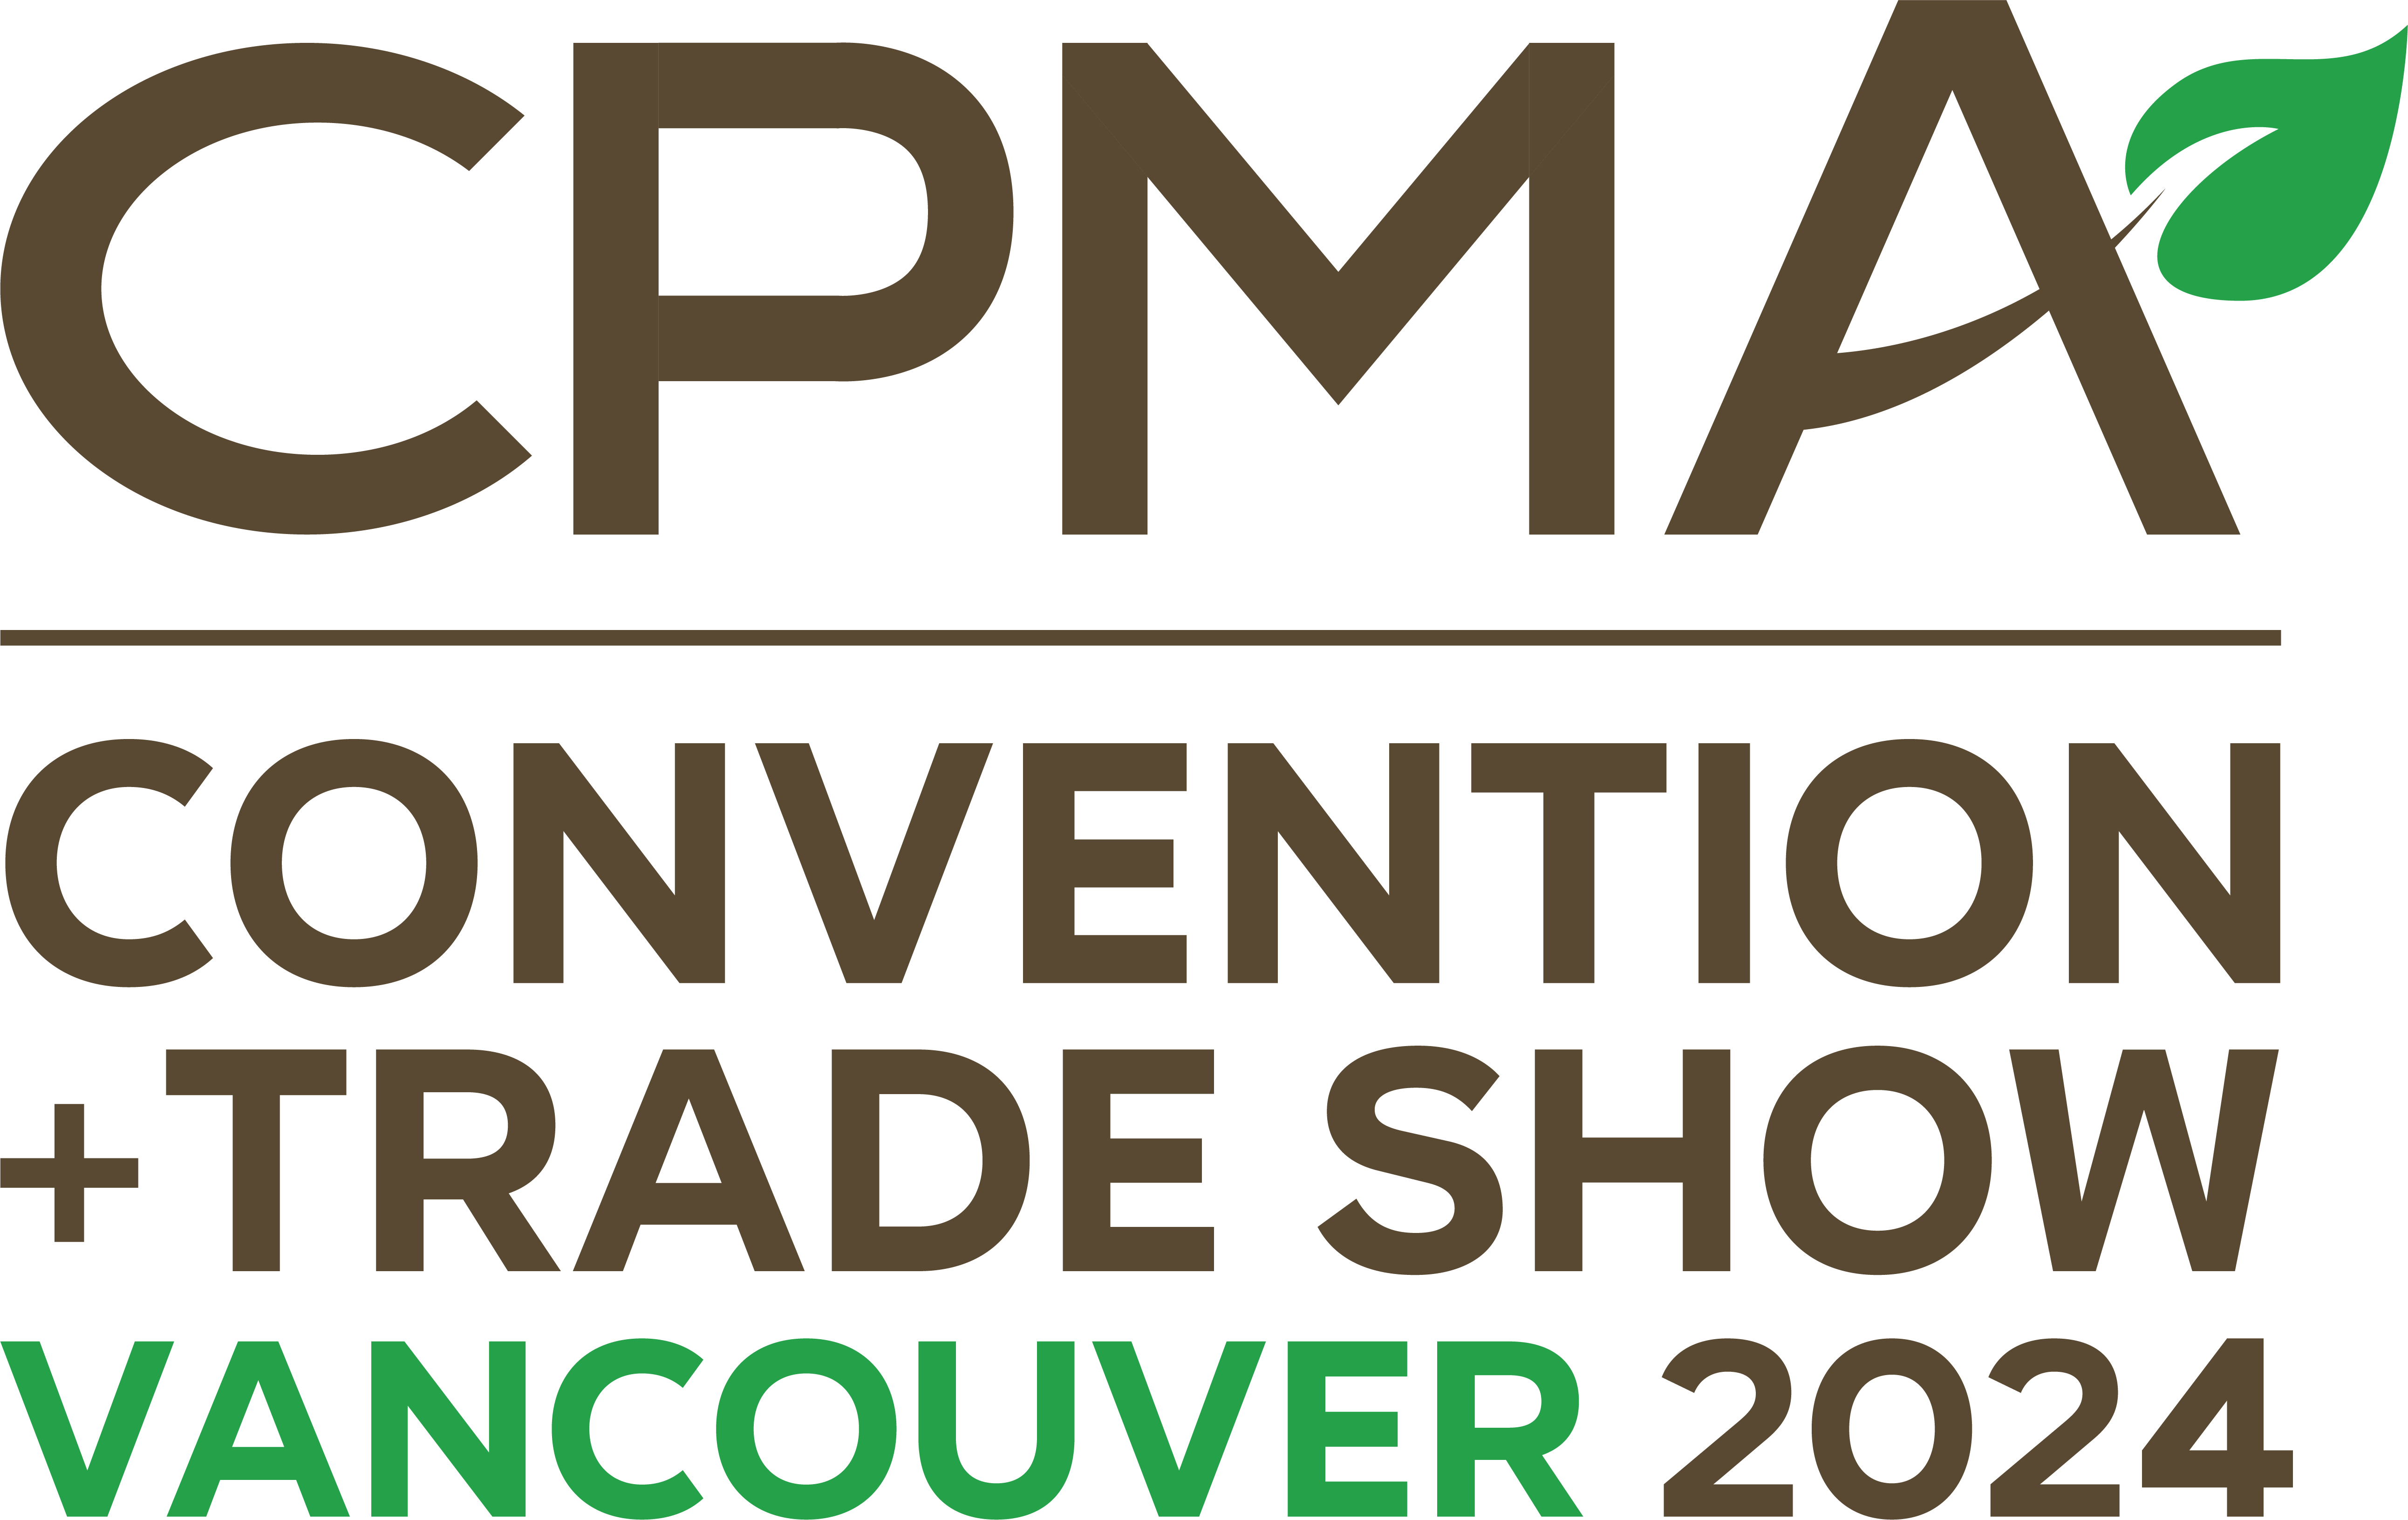 CPMA Vancouver 2024